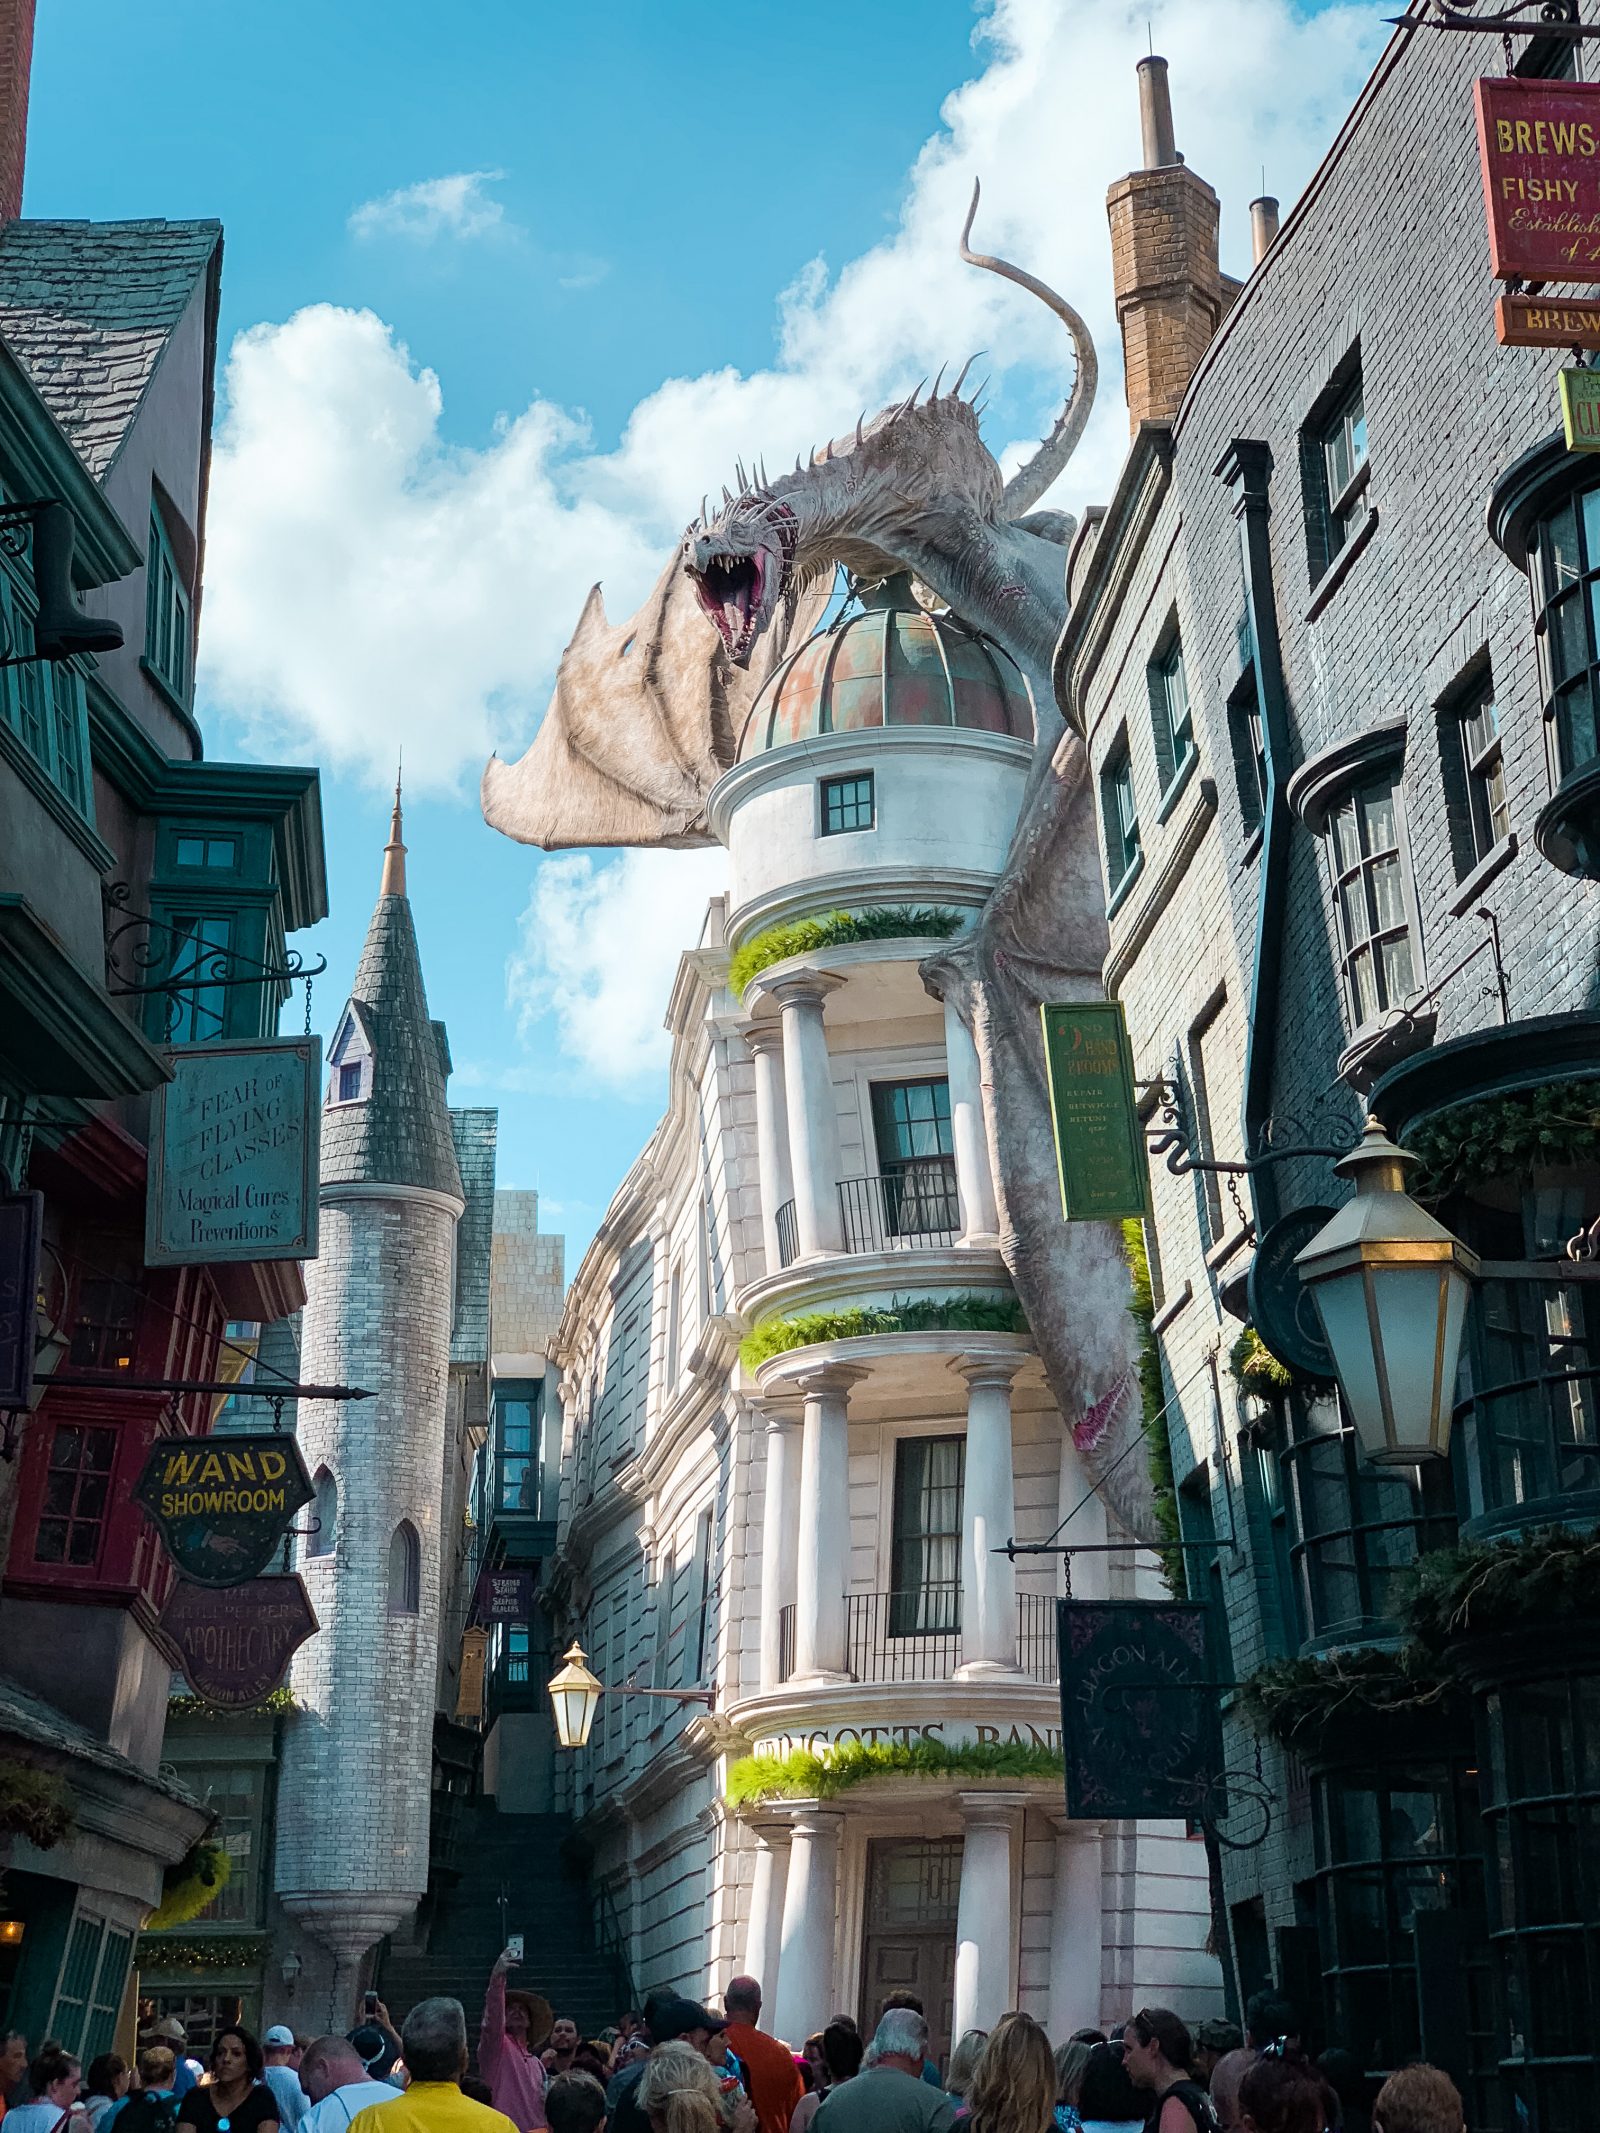 Gringotts Bank with a dragon on top at Universal Studios Orlando